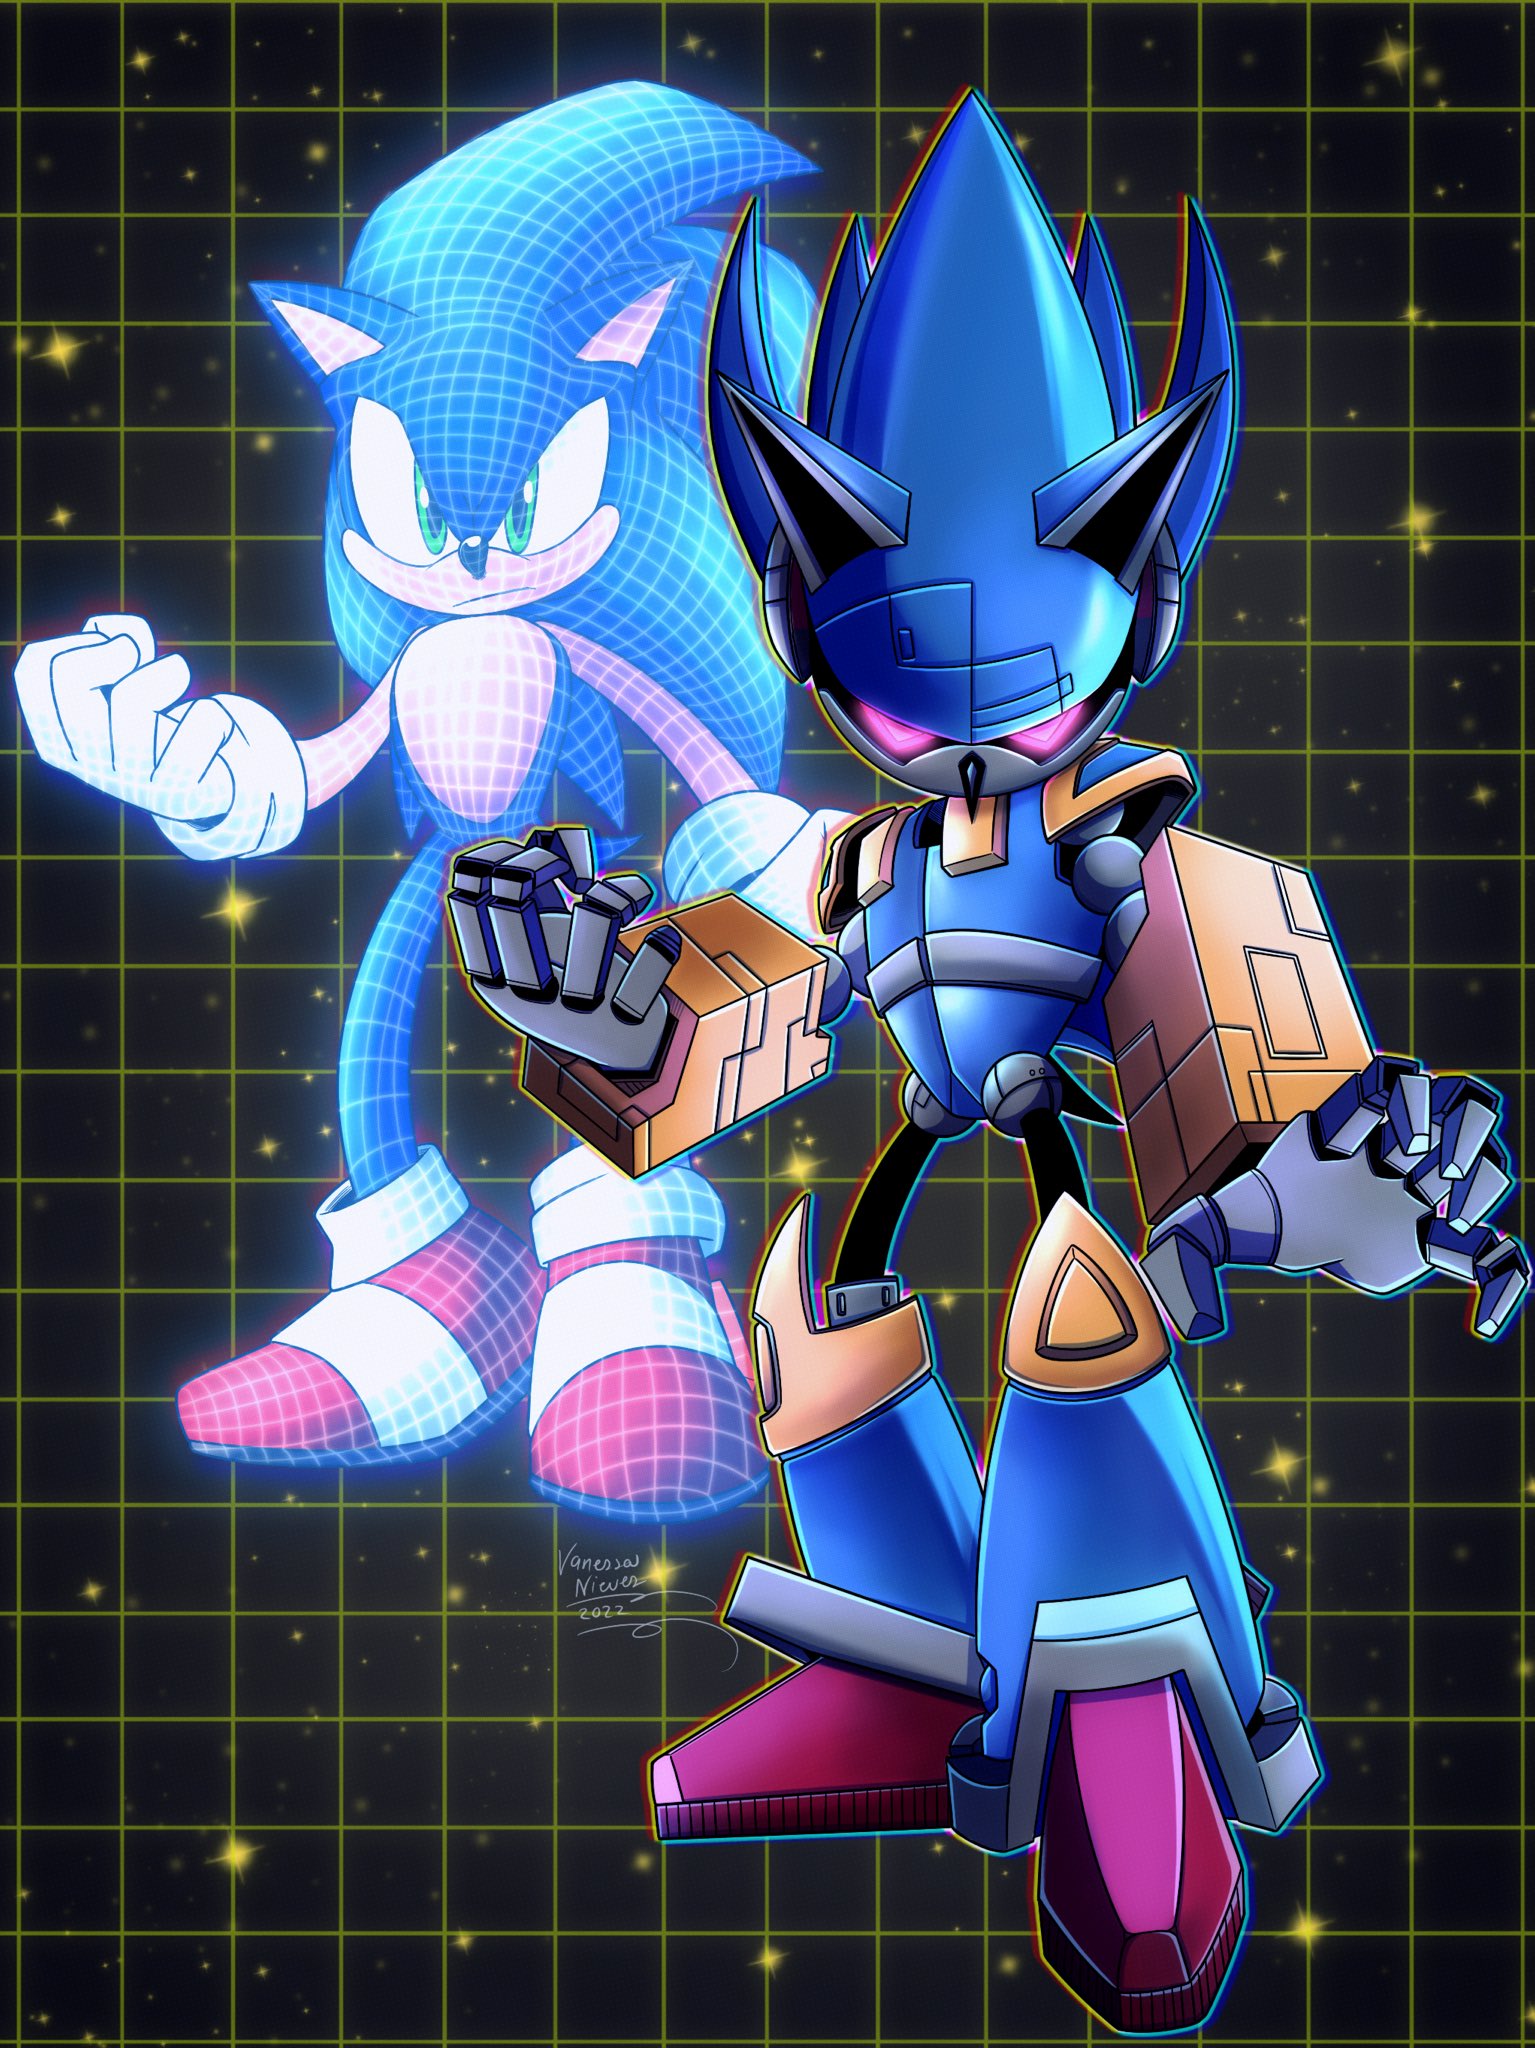 Giga on X: DAY 23 : Space #31DaysSonic #Sonic #SonicTheHedgehog   / X